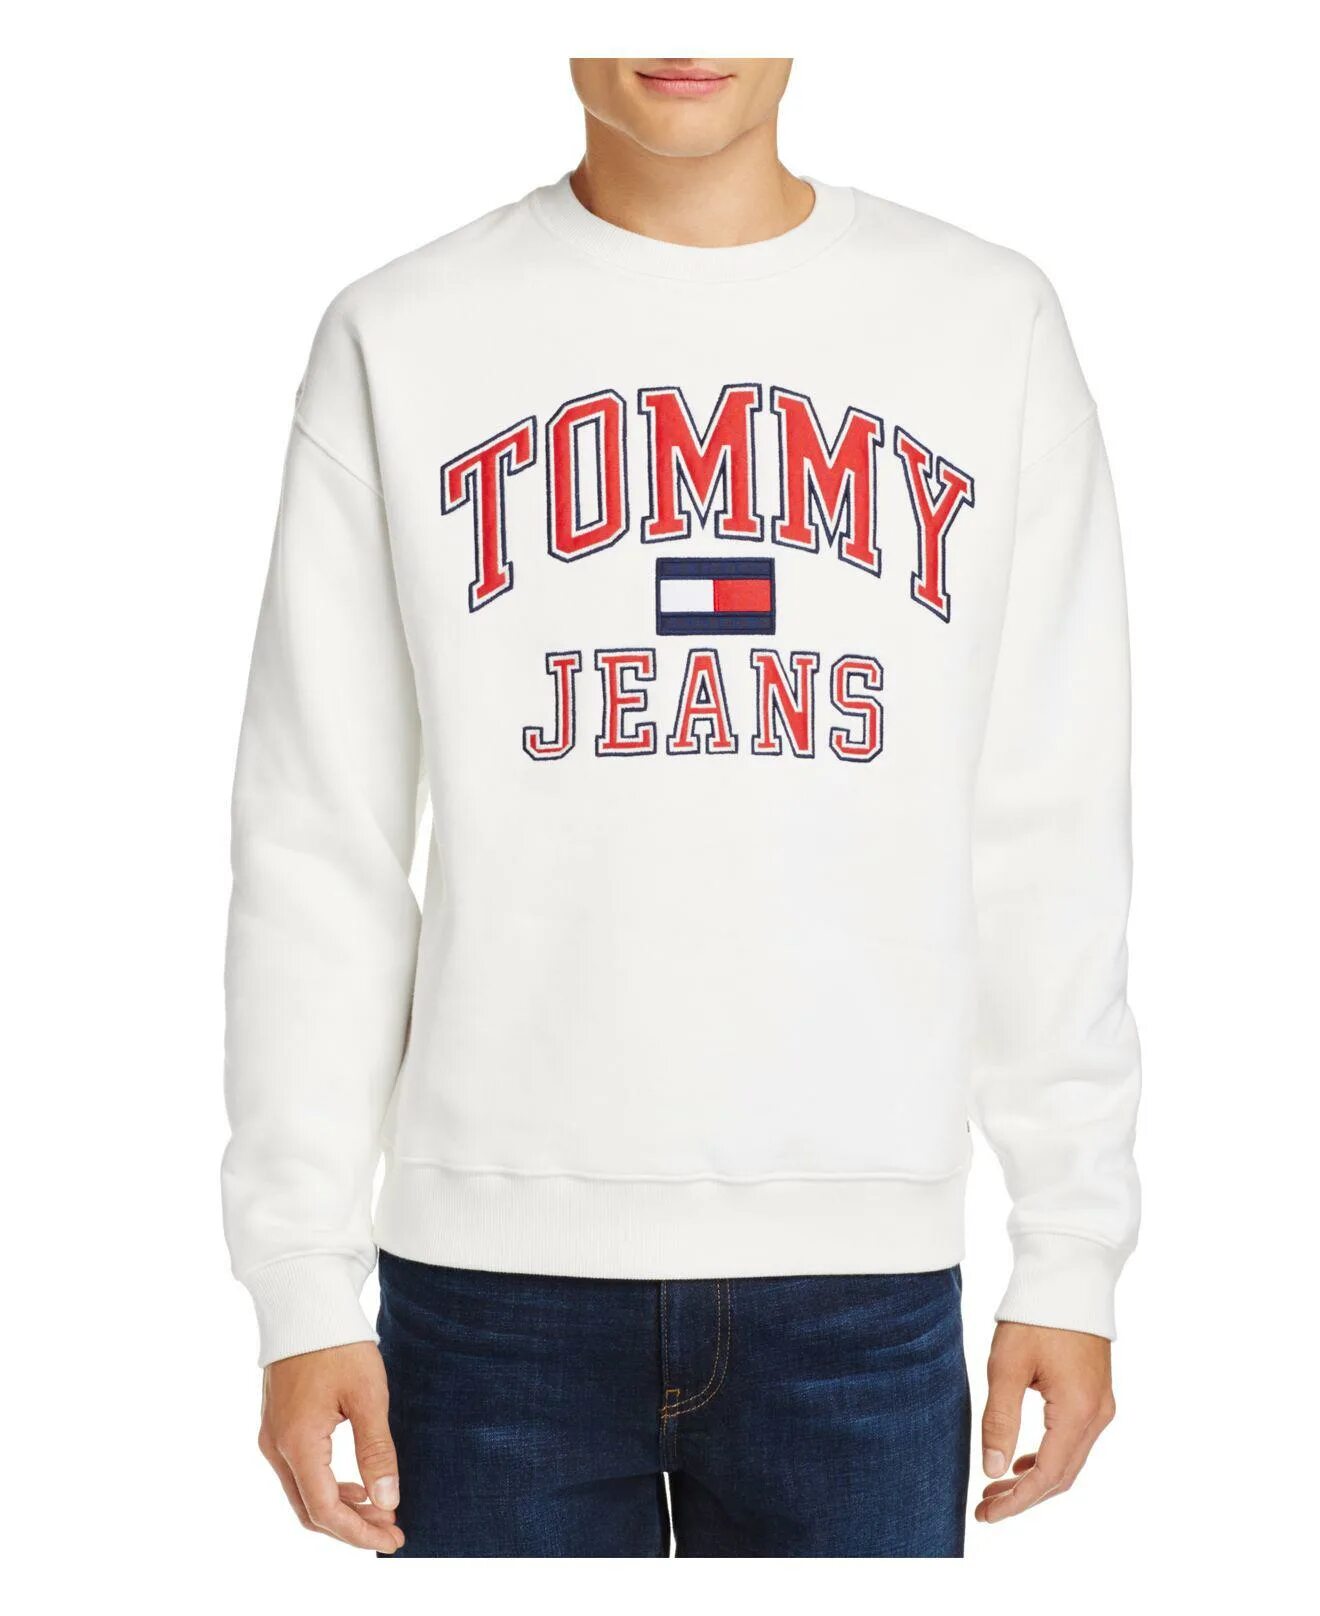 Tommy shriggly кто это. Томми джинс логотип. Худи Tommy Hilfiger 90s. Tommy Jeans надпись. Томми Хилфигер джинс USA худи.